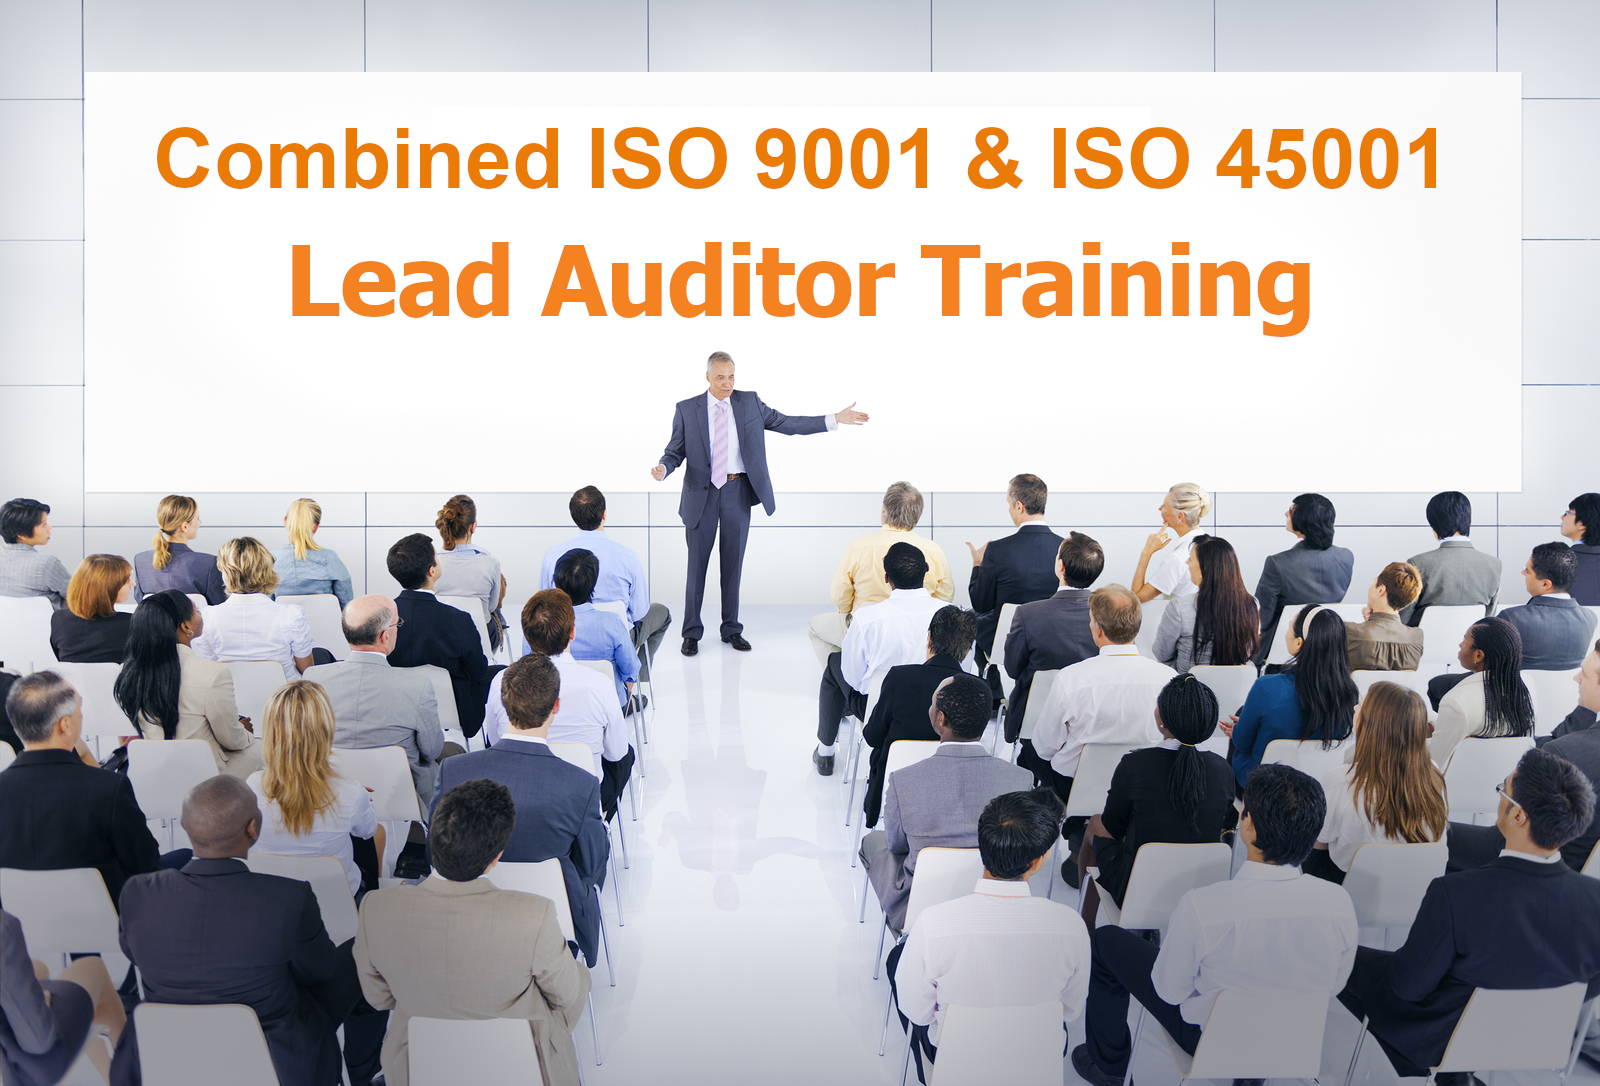 Training Room combined 9001 1400 Lead Auditor Training